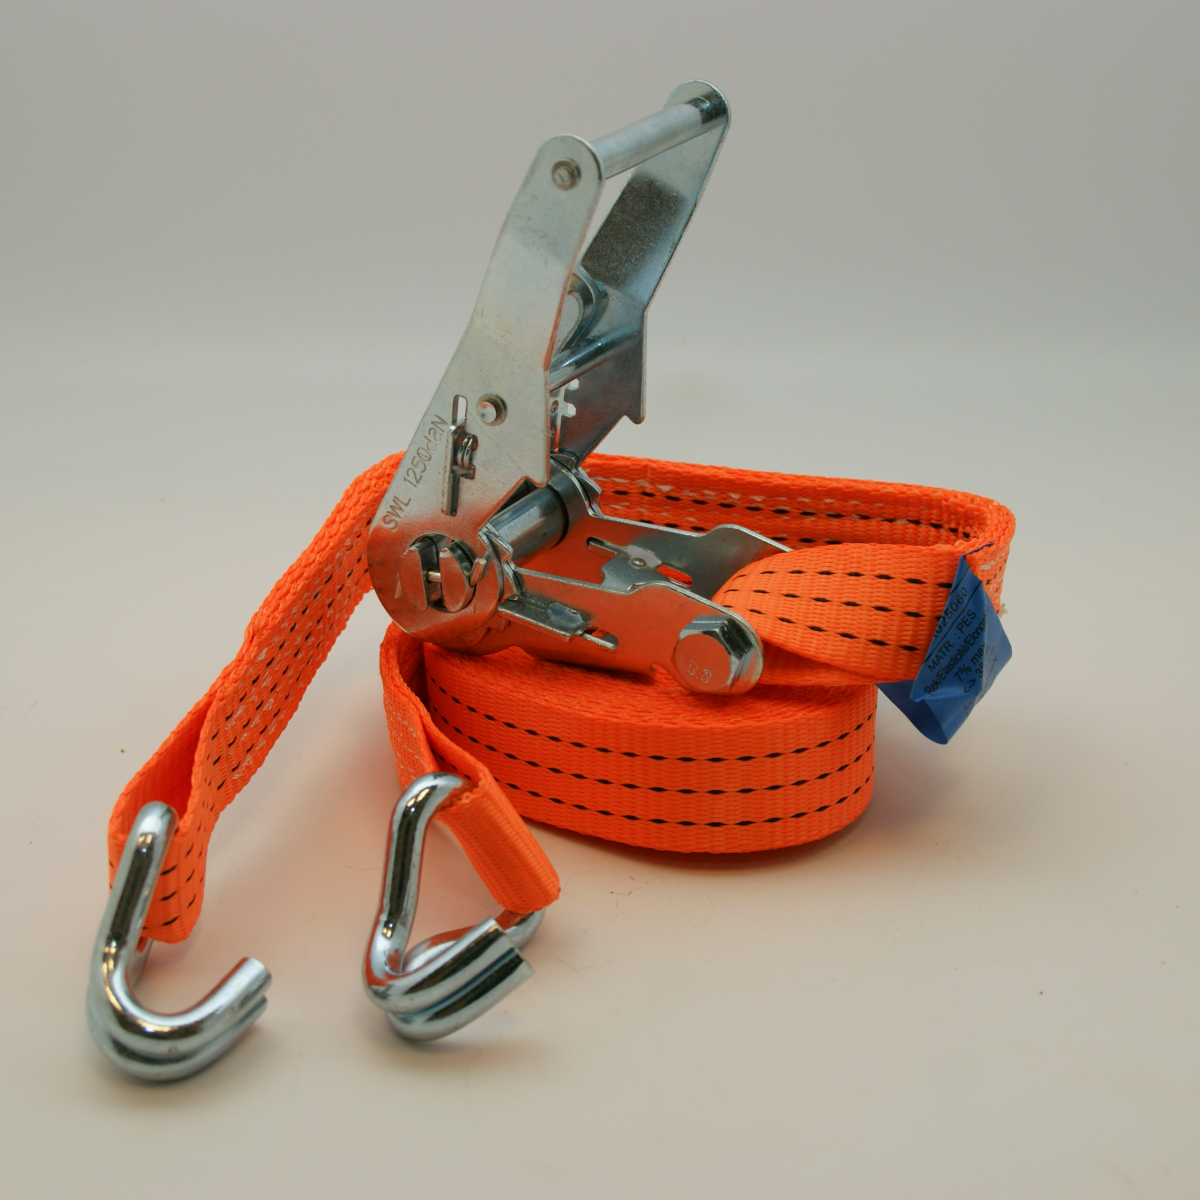 Sjorband: Spanband smalle haak oranje, 35mm 1250daN 8m